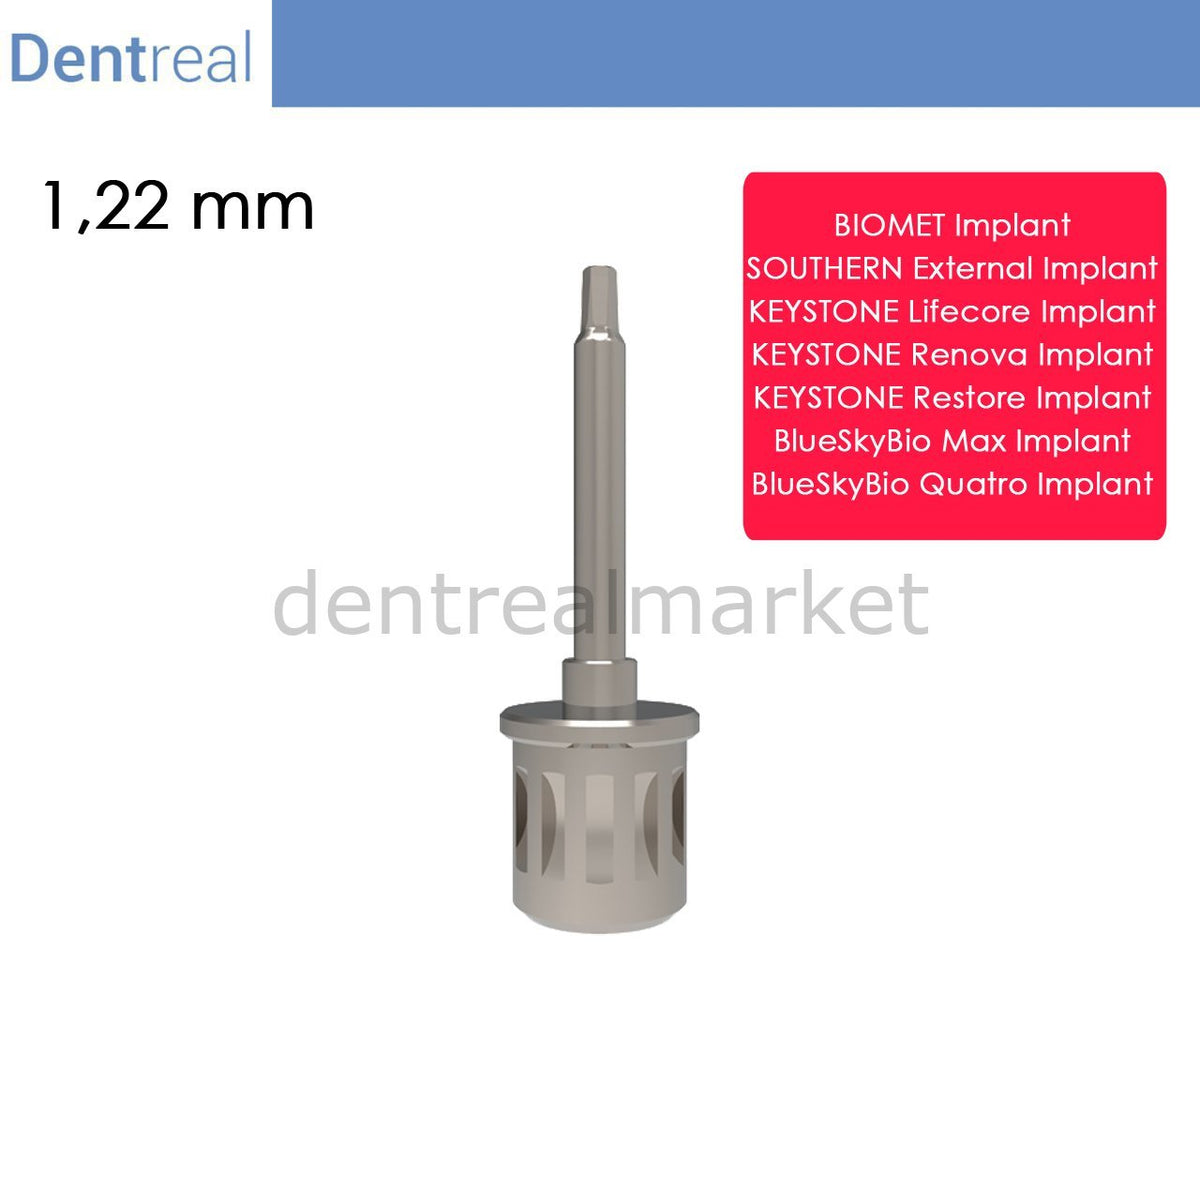 DentrealStore - Dentreal Screwdriver for Keystone Renova Implant - 1,22 mm Hex Driver